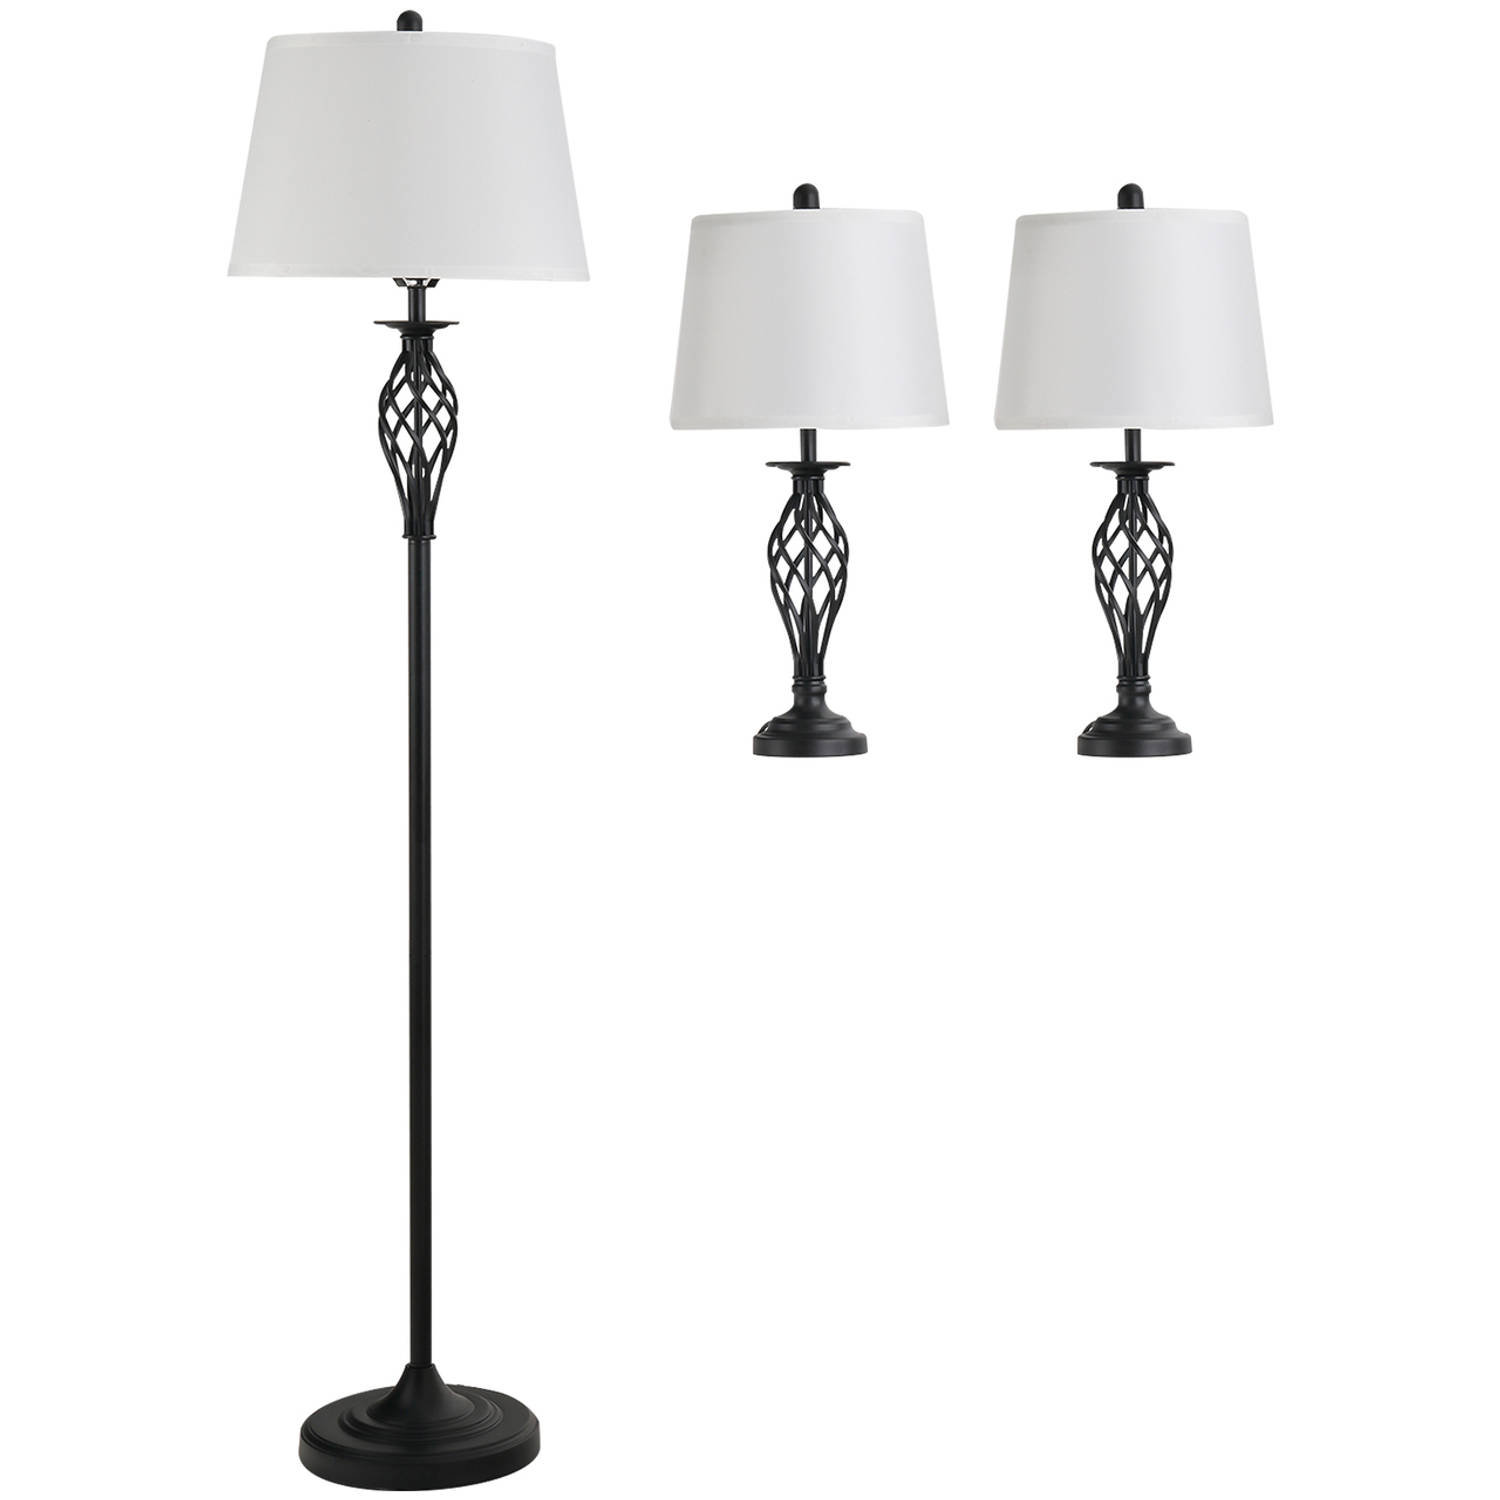 Definitie Verborgen Misverstand Driedelige set van 1 staande lamp en 2 tafellampen - Vloerlamp - Stalamp -  tafellamp - Vintage - Klassiek - Zwart/wit | Blokker